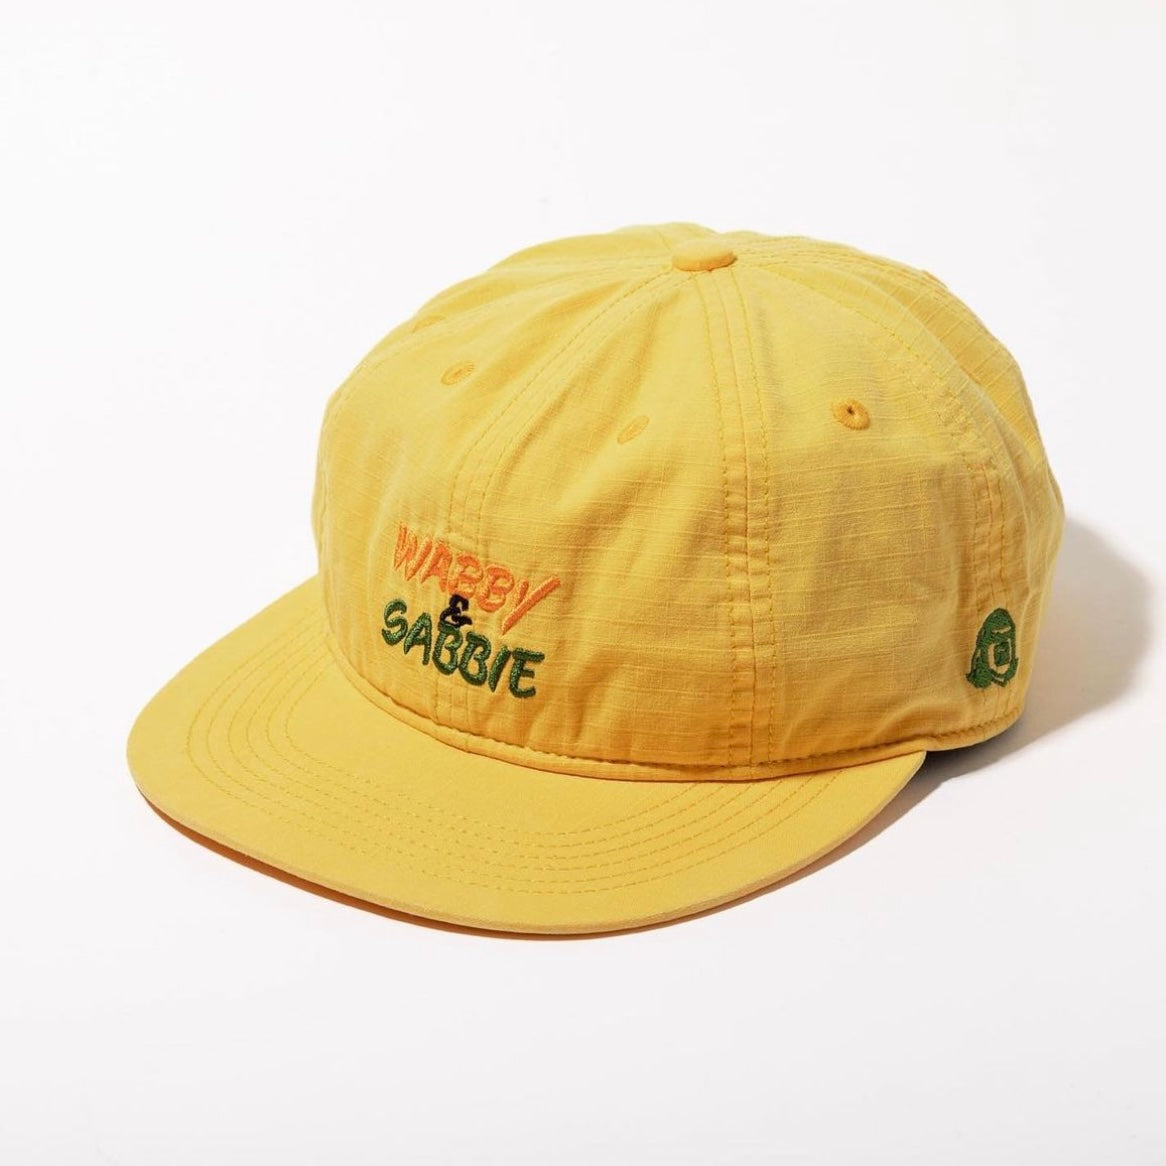 "WABBY & SABBIE CAP ’23 / designed by Jerry UKAI"